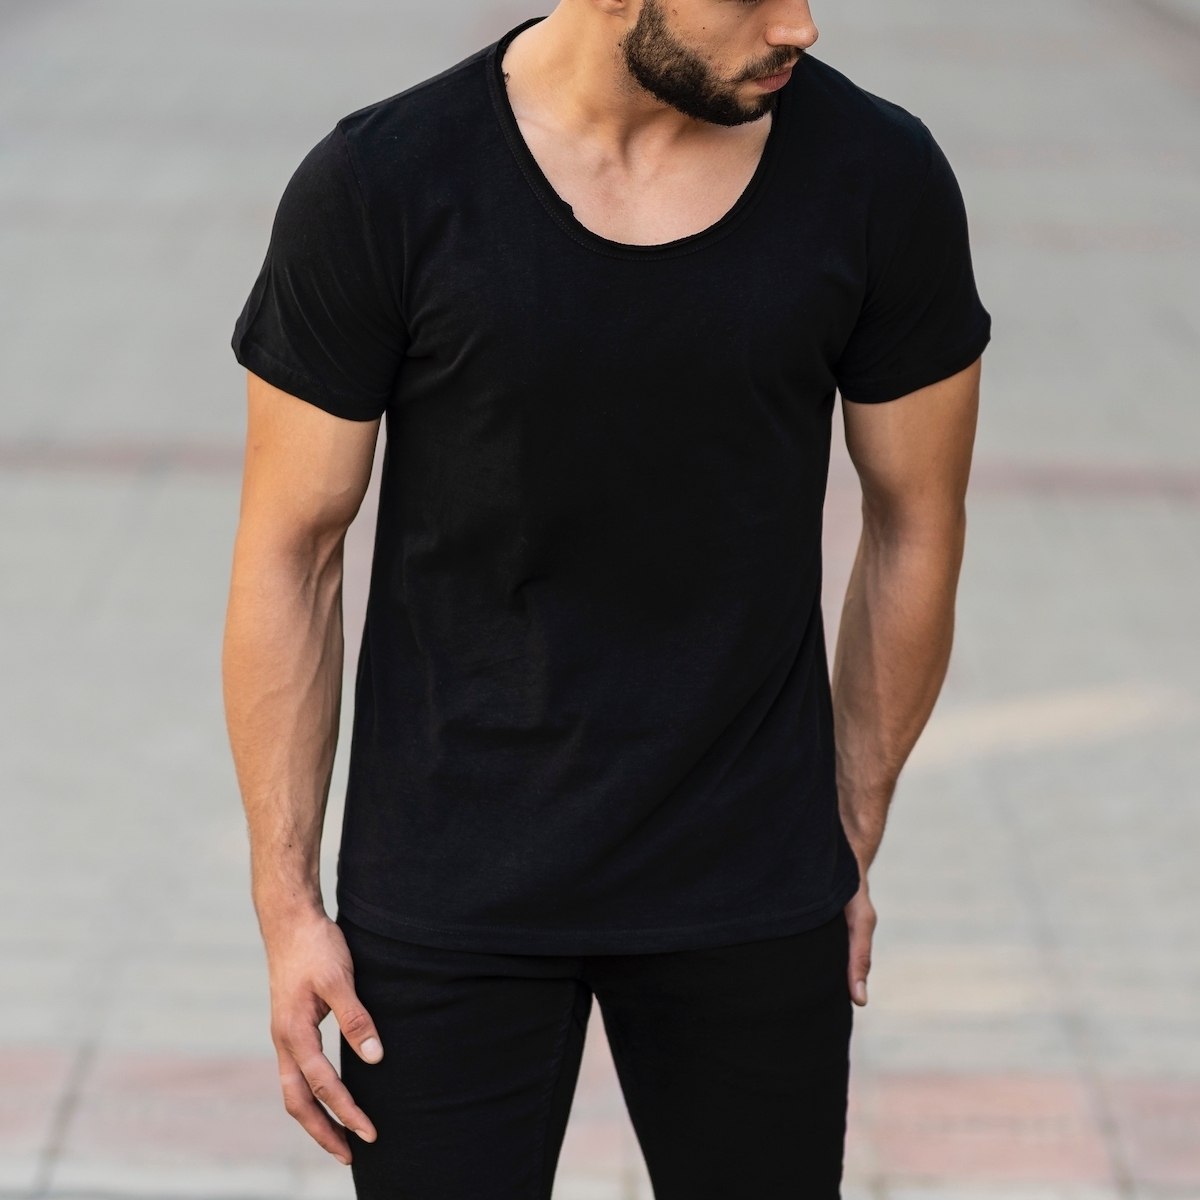 Croped Collar Black T-Shirt - 4